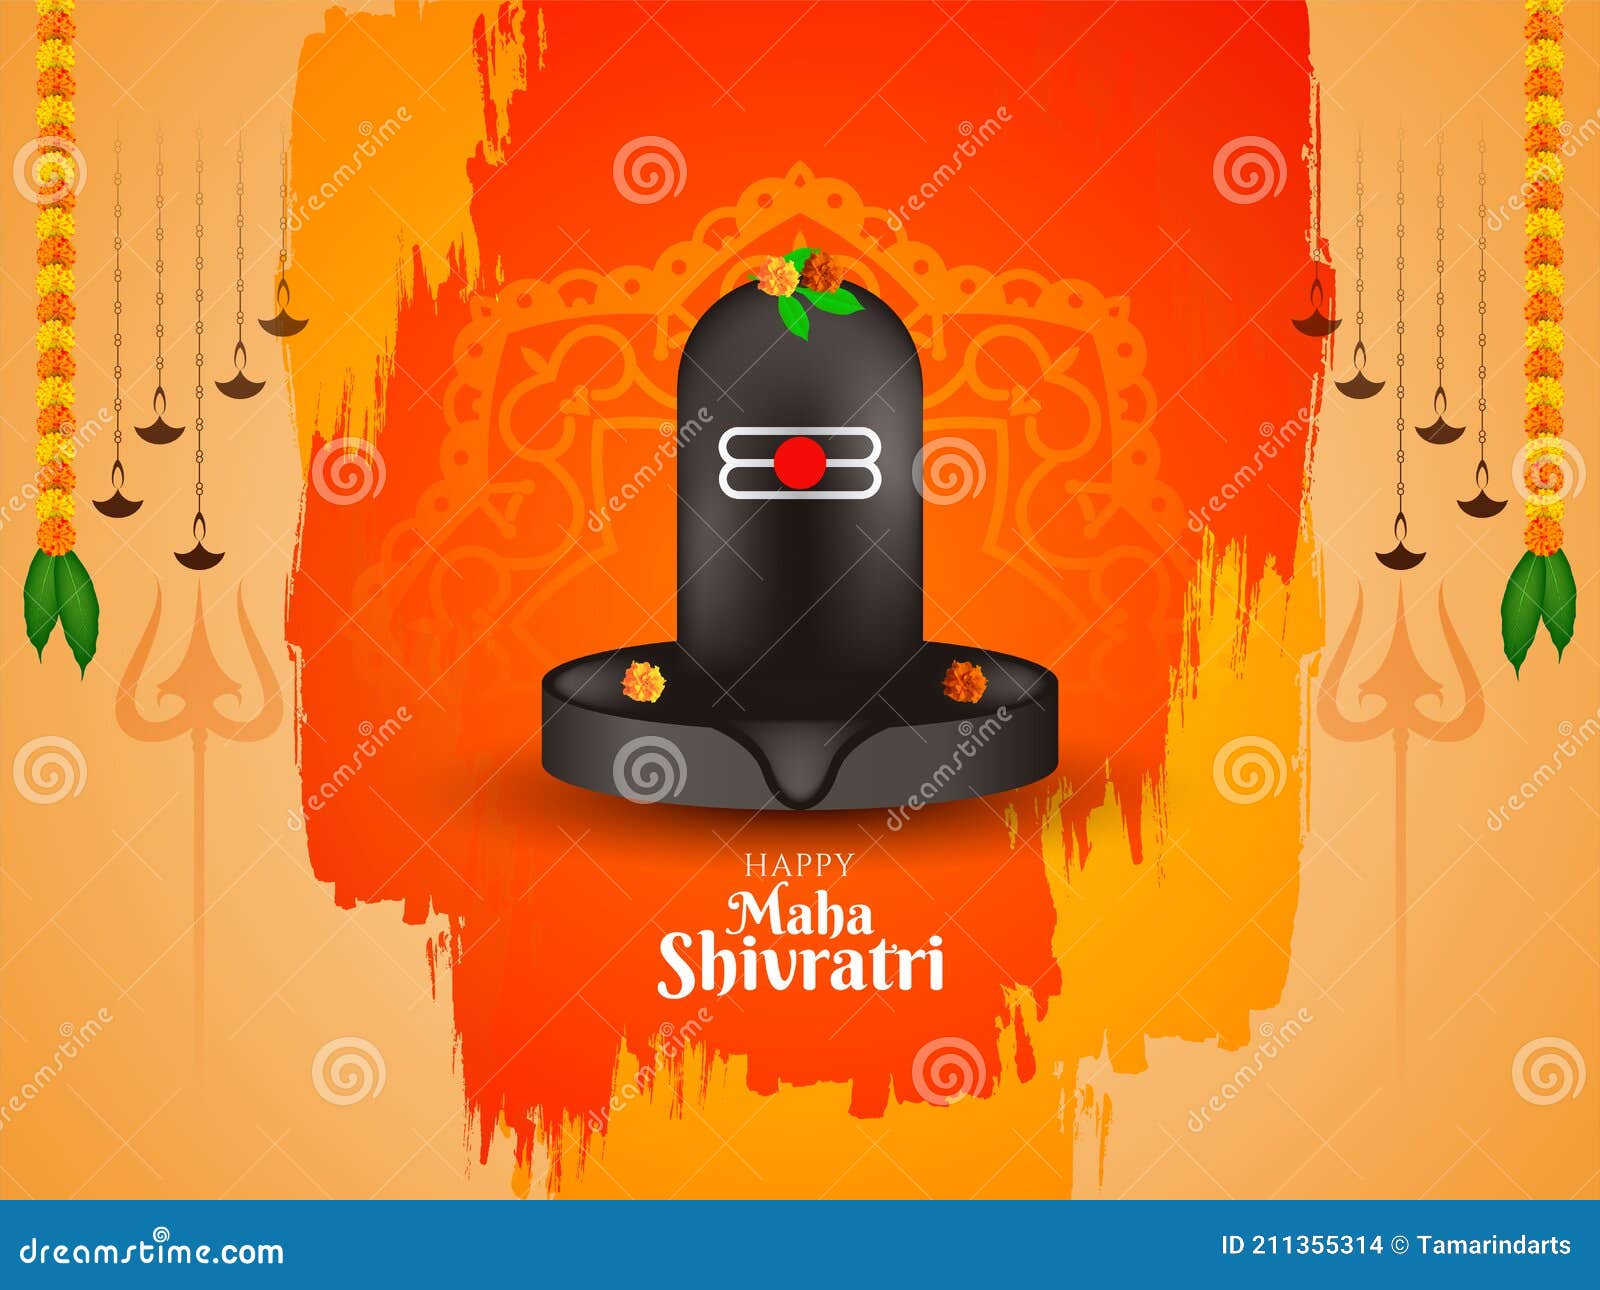 Artistic Religious Maha Shivratri Background Stock Vector - Illustration of  celebration, deity: 211355314